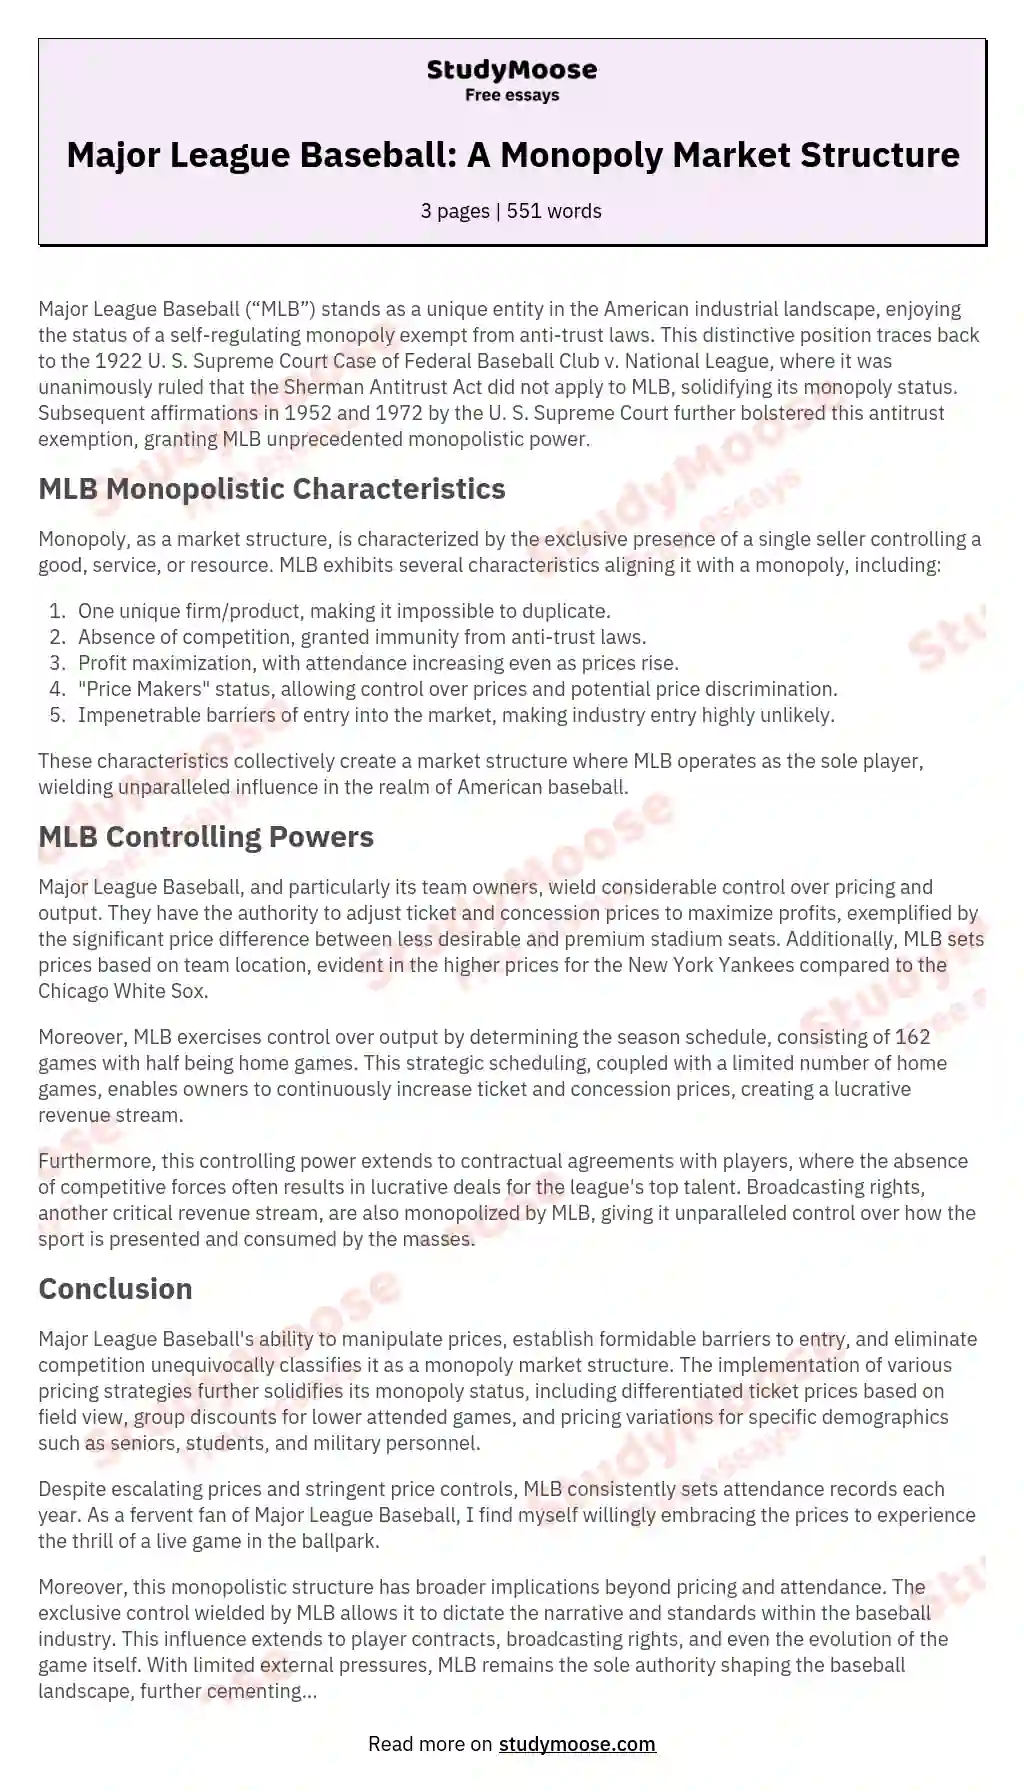 Major League Baseball: A Monopoly Market Structure essay